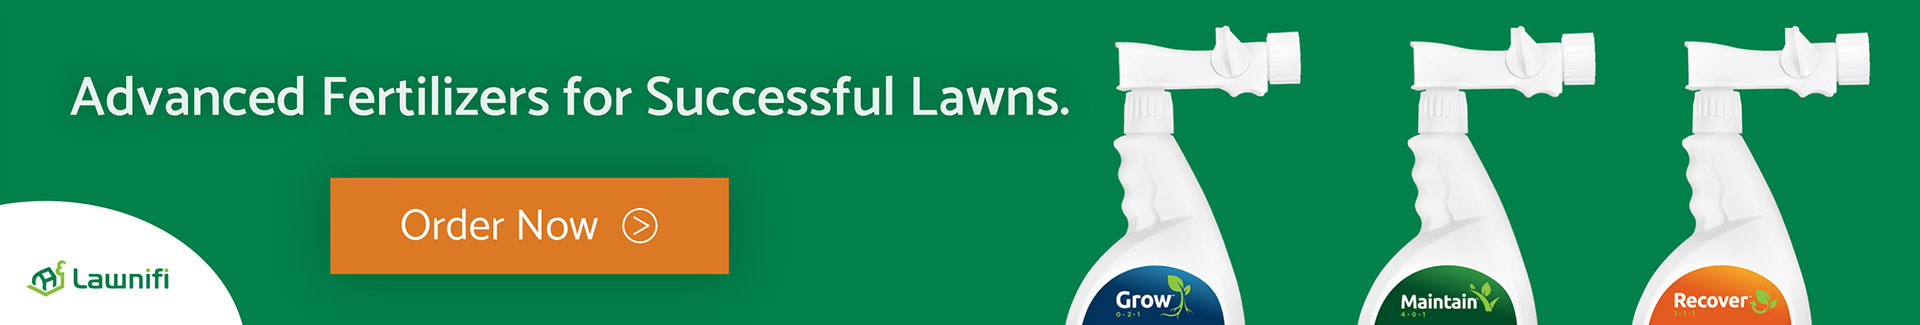 Lawnifi Banner - Advanced Fertilizers for Successful Lawns